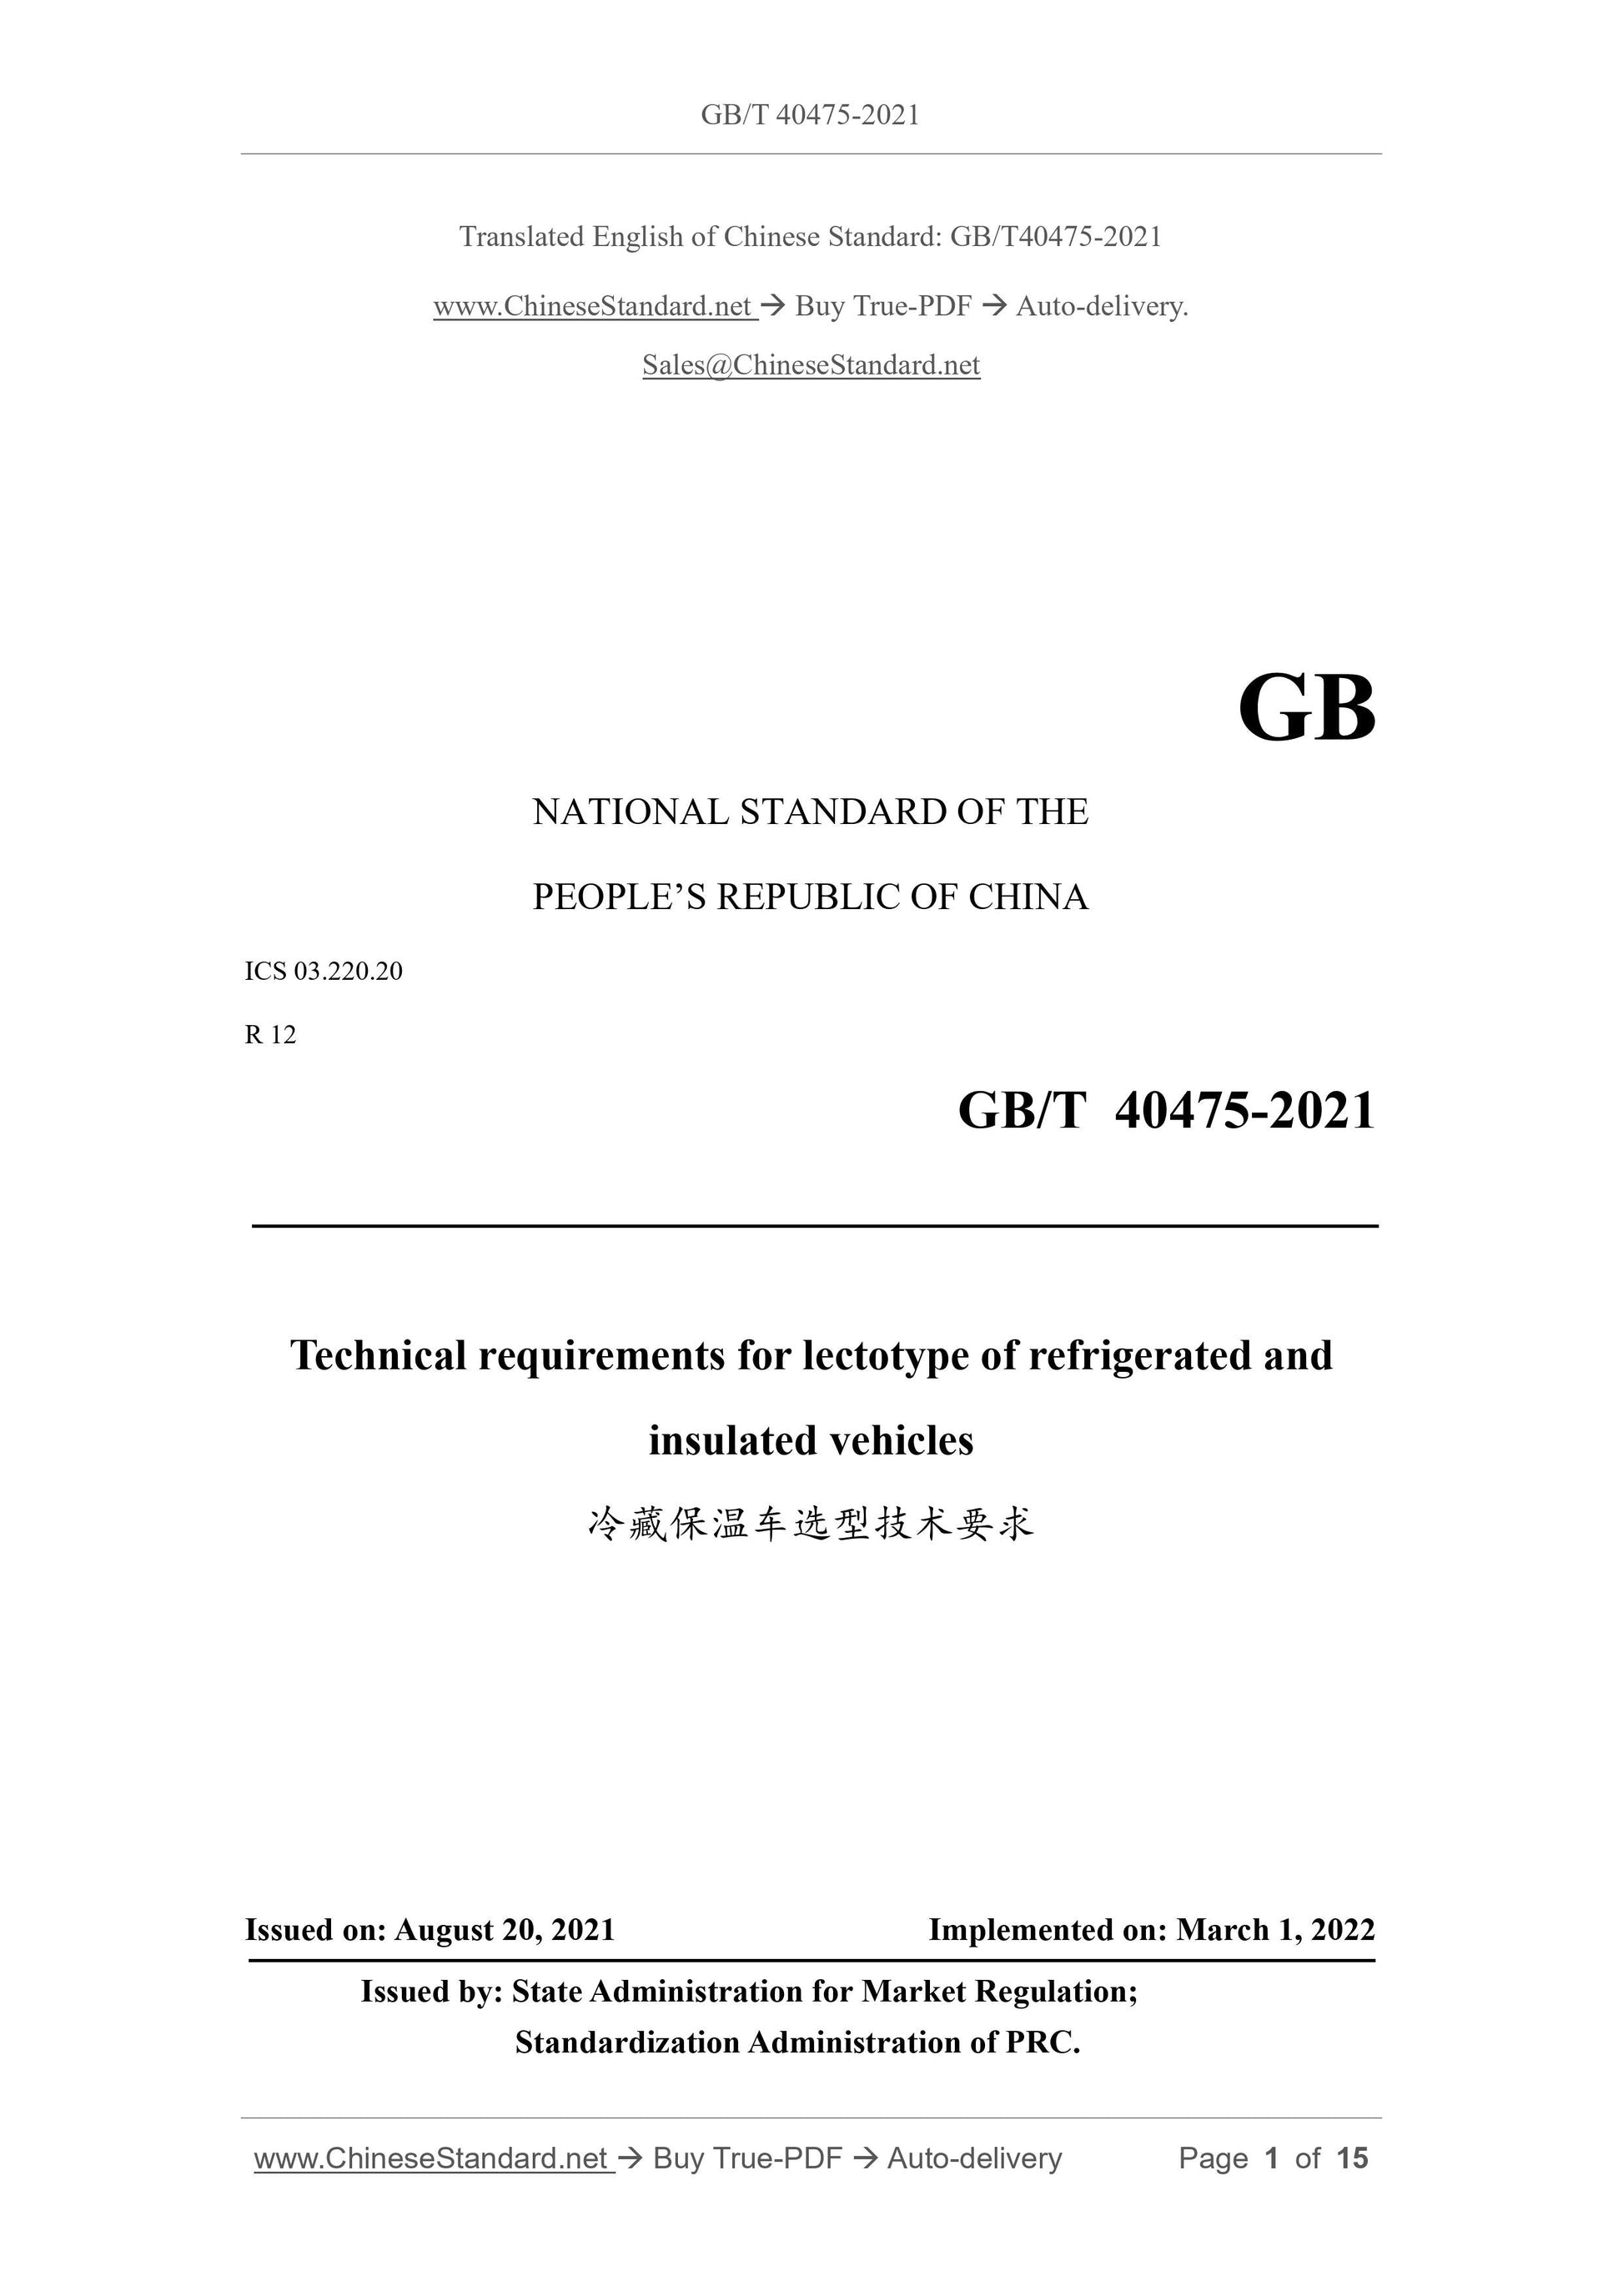 GBT40475-2021 Page 1